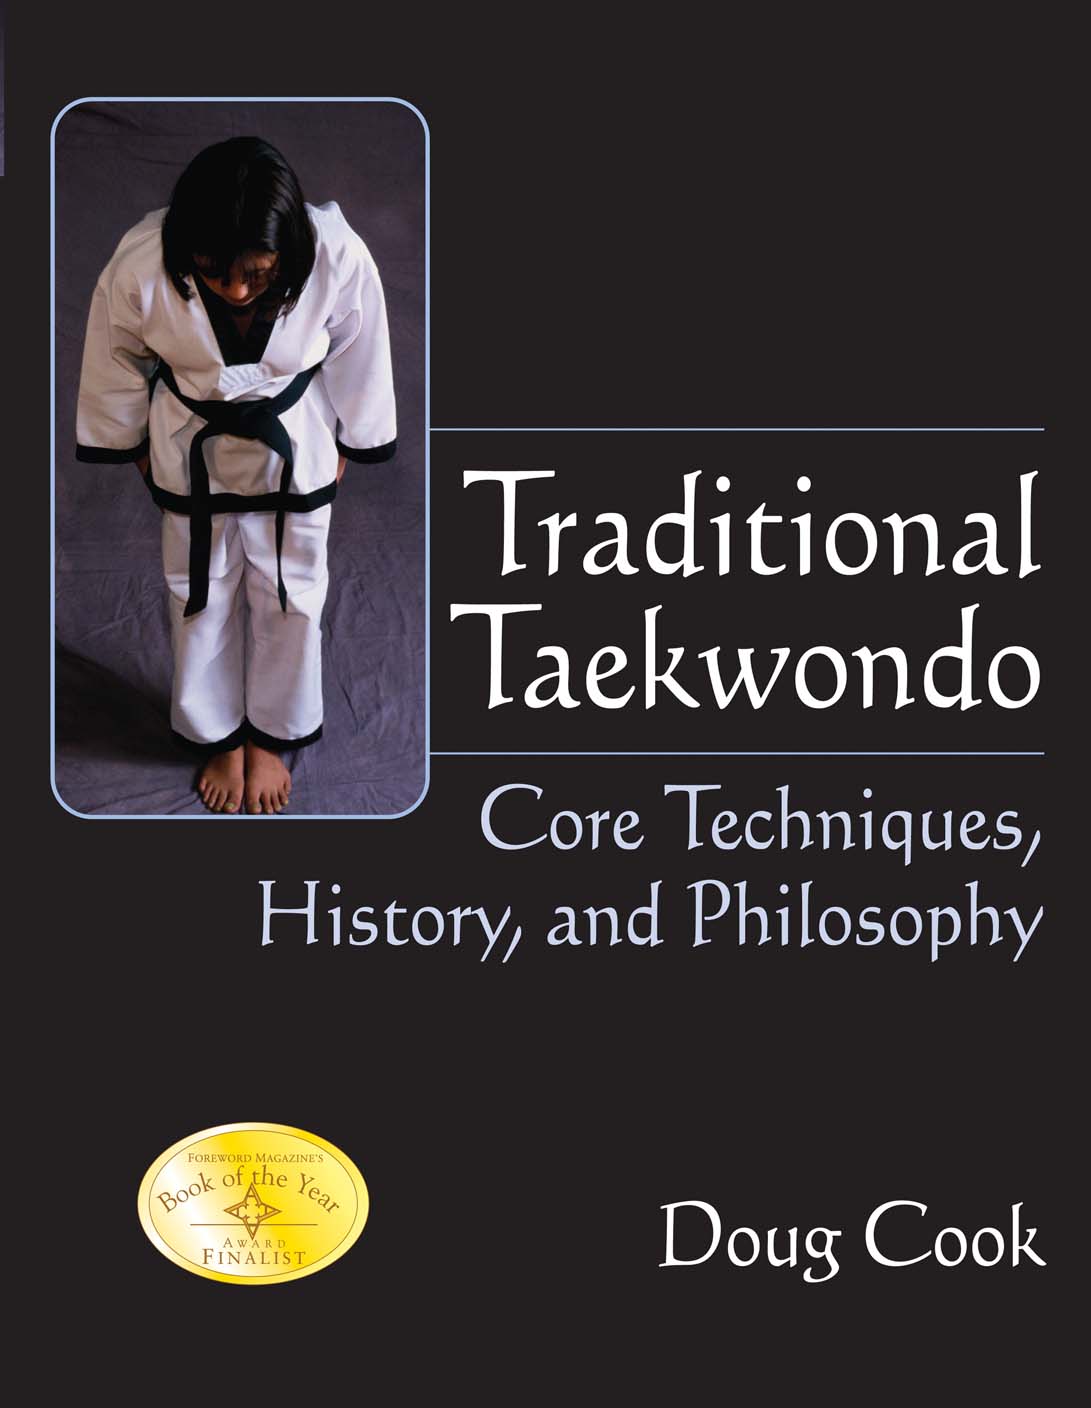 Doug Cook, Traditional Taekwondo